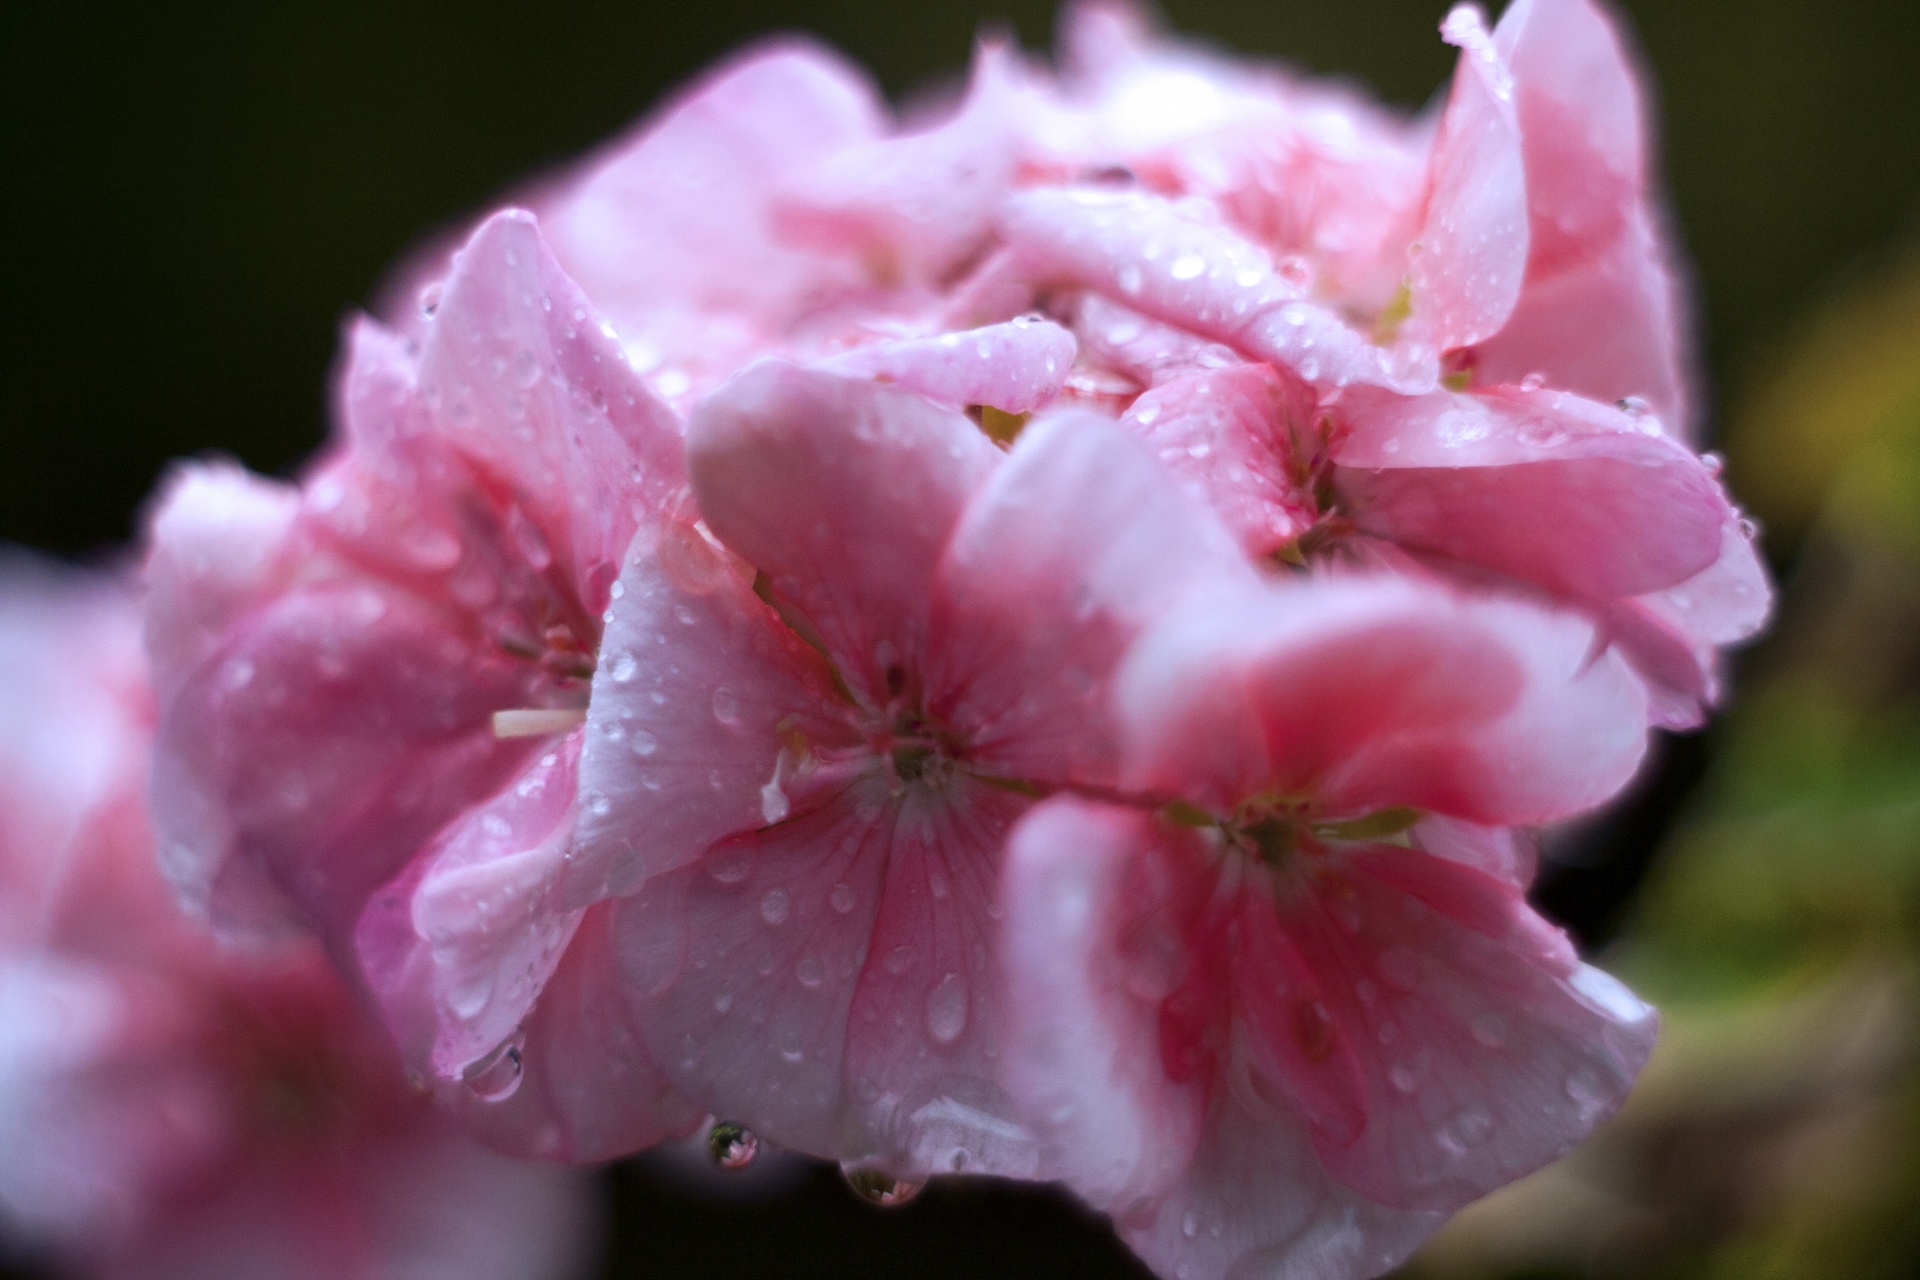 Raindrops on the flower